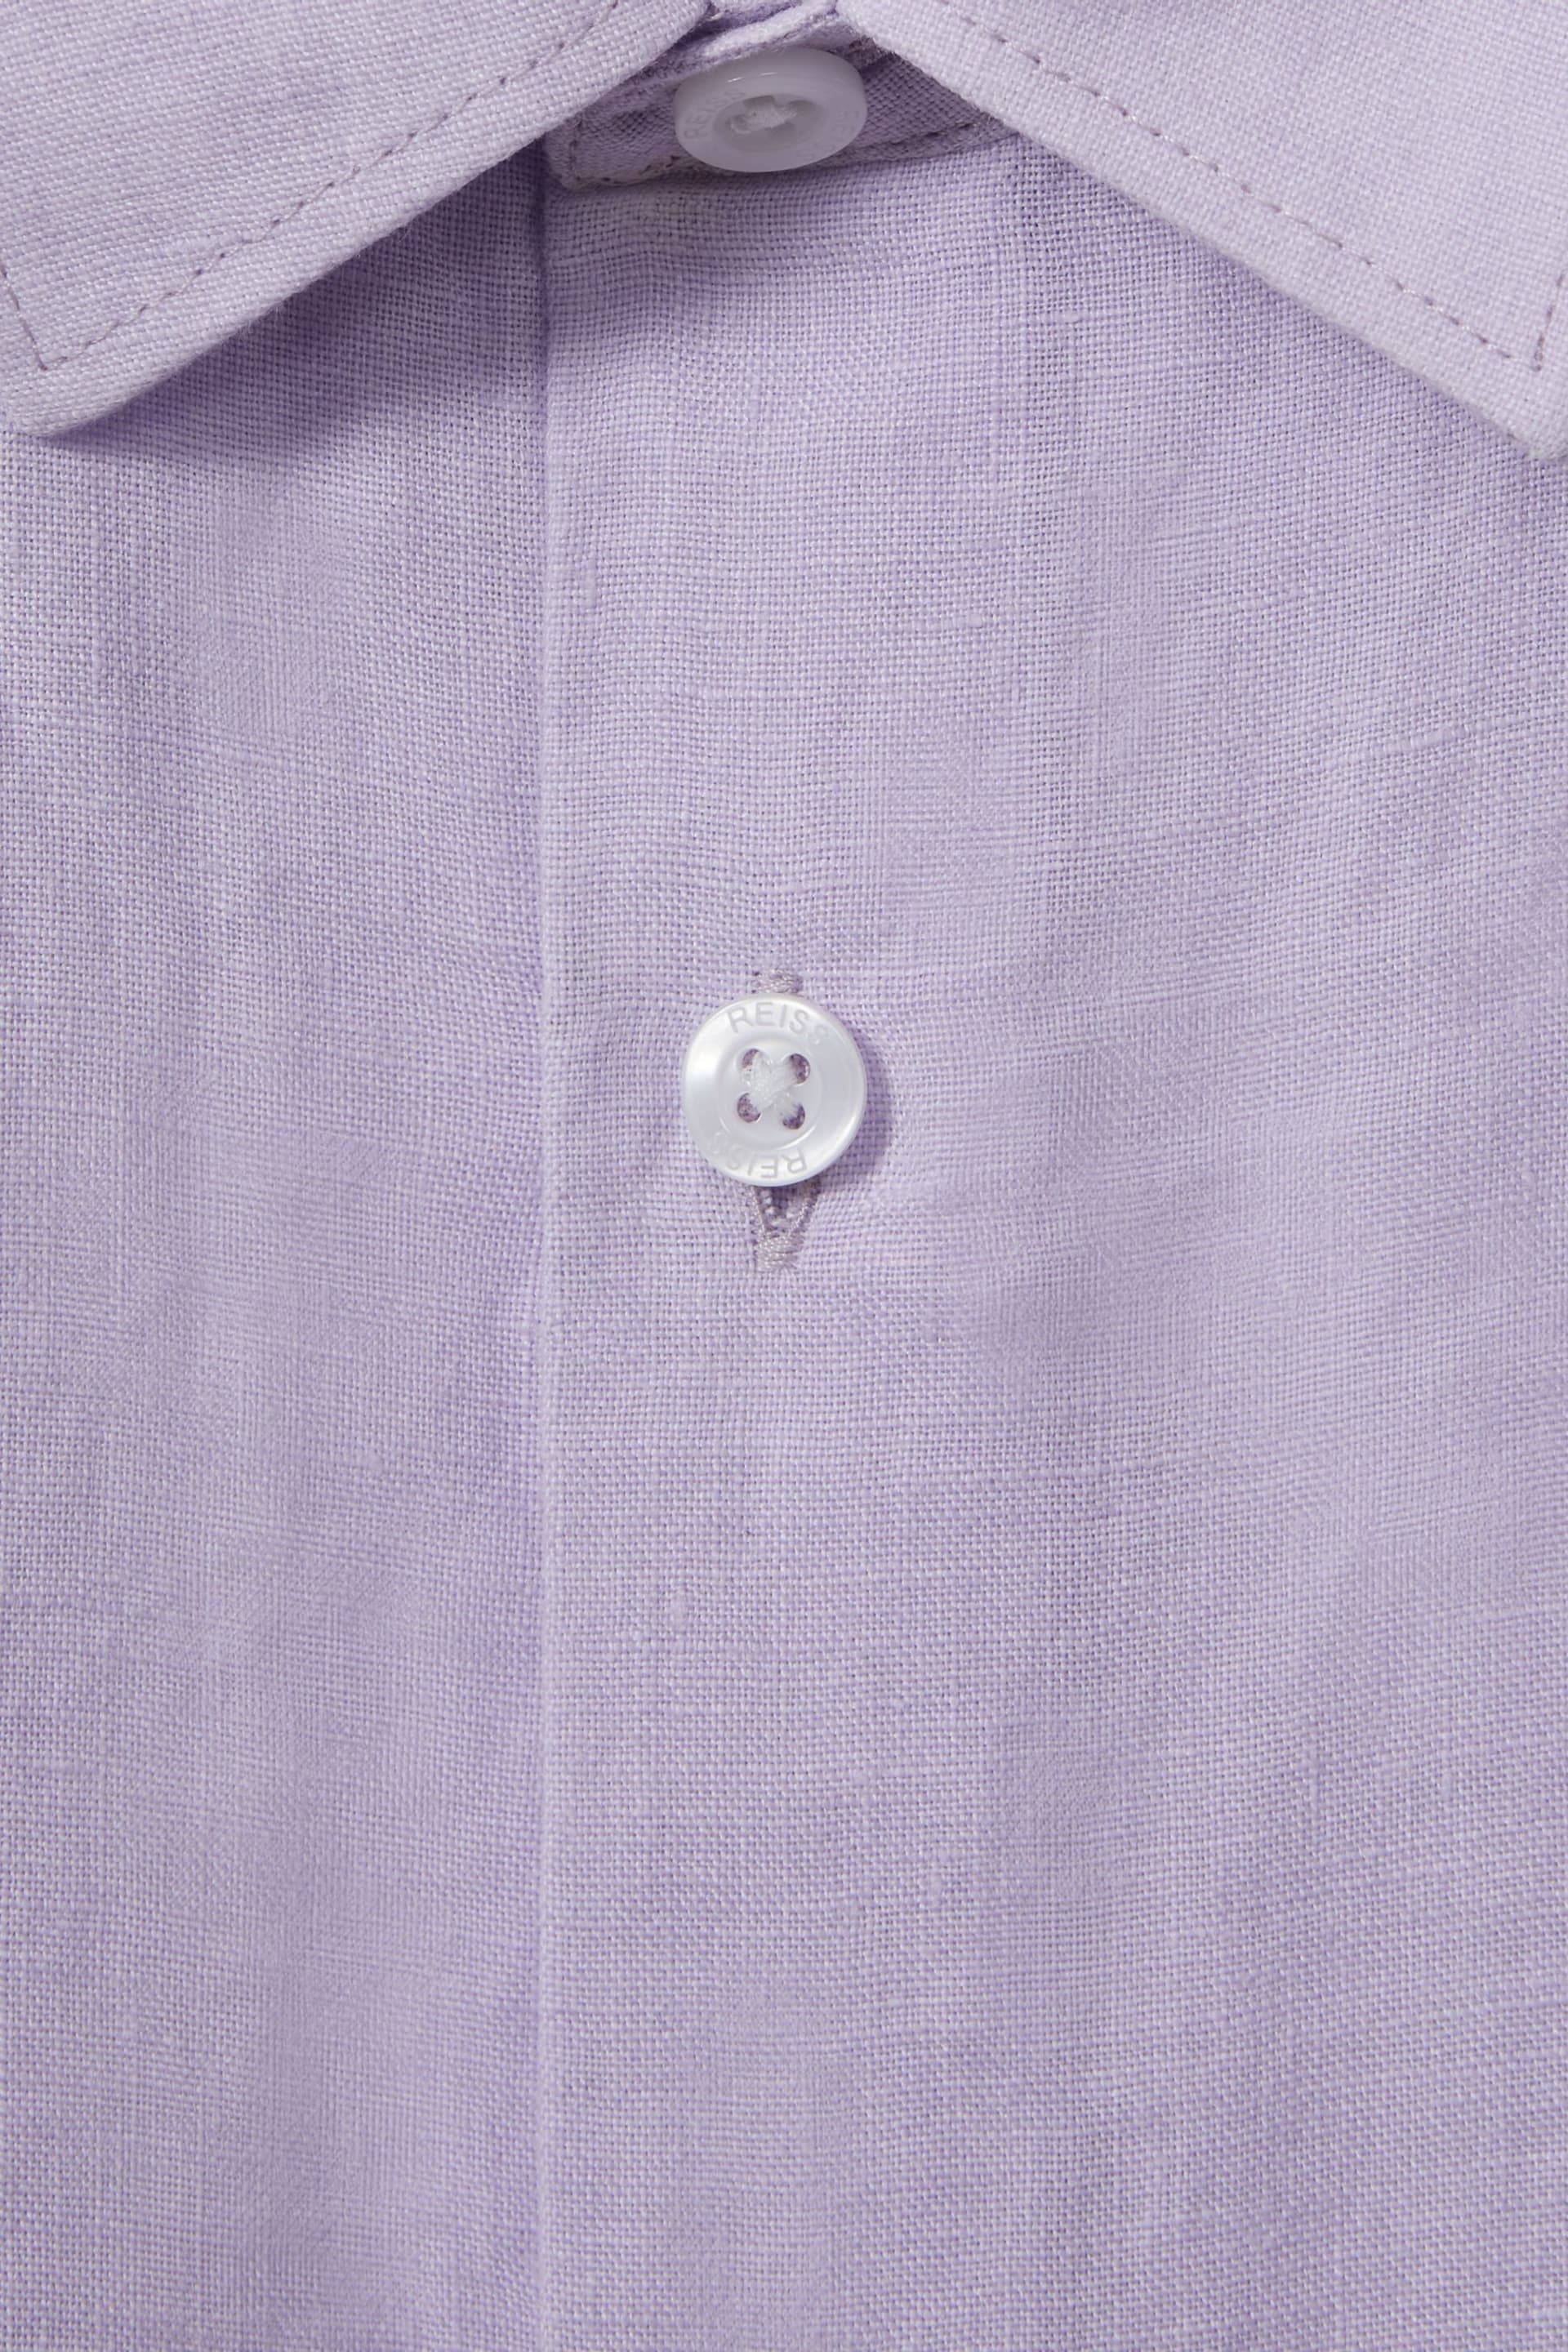 Reiss Orchid Holiday Senior Short Sleeve Linen Shirt - Image 4 of 4